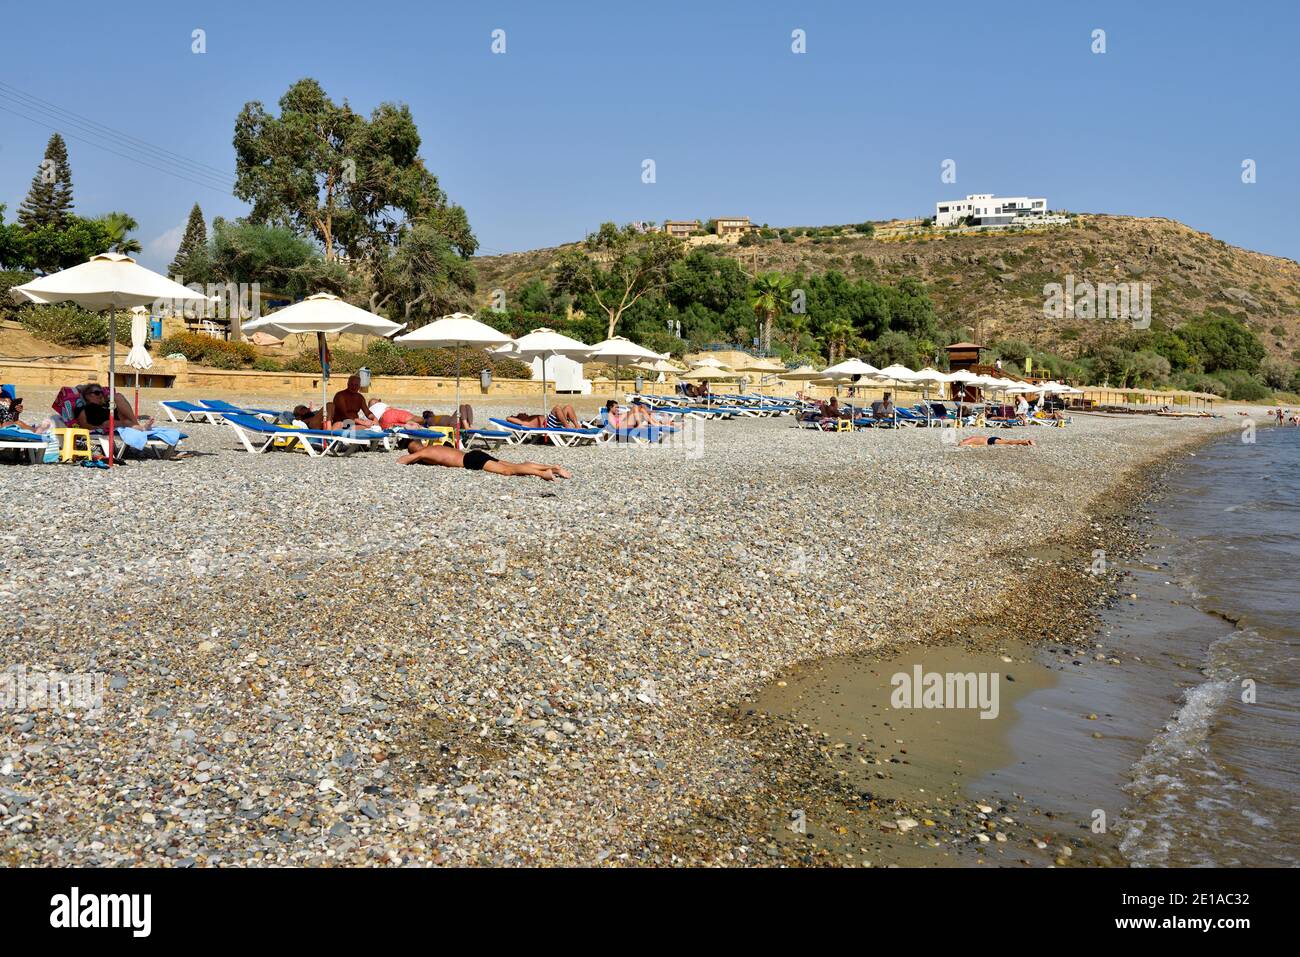 Pissouri pebbly beach with deck chairs and shade umbrellas on Mediterranean sea, Pissouri, Cyprus Stock Photo